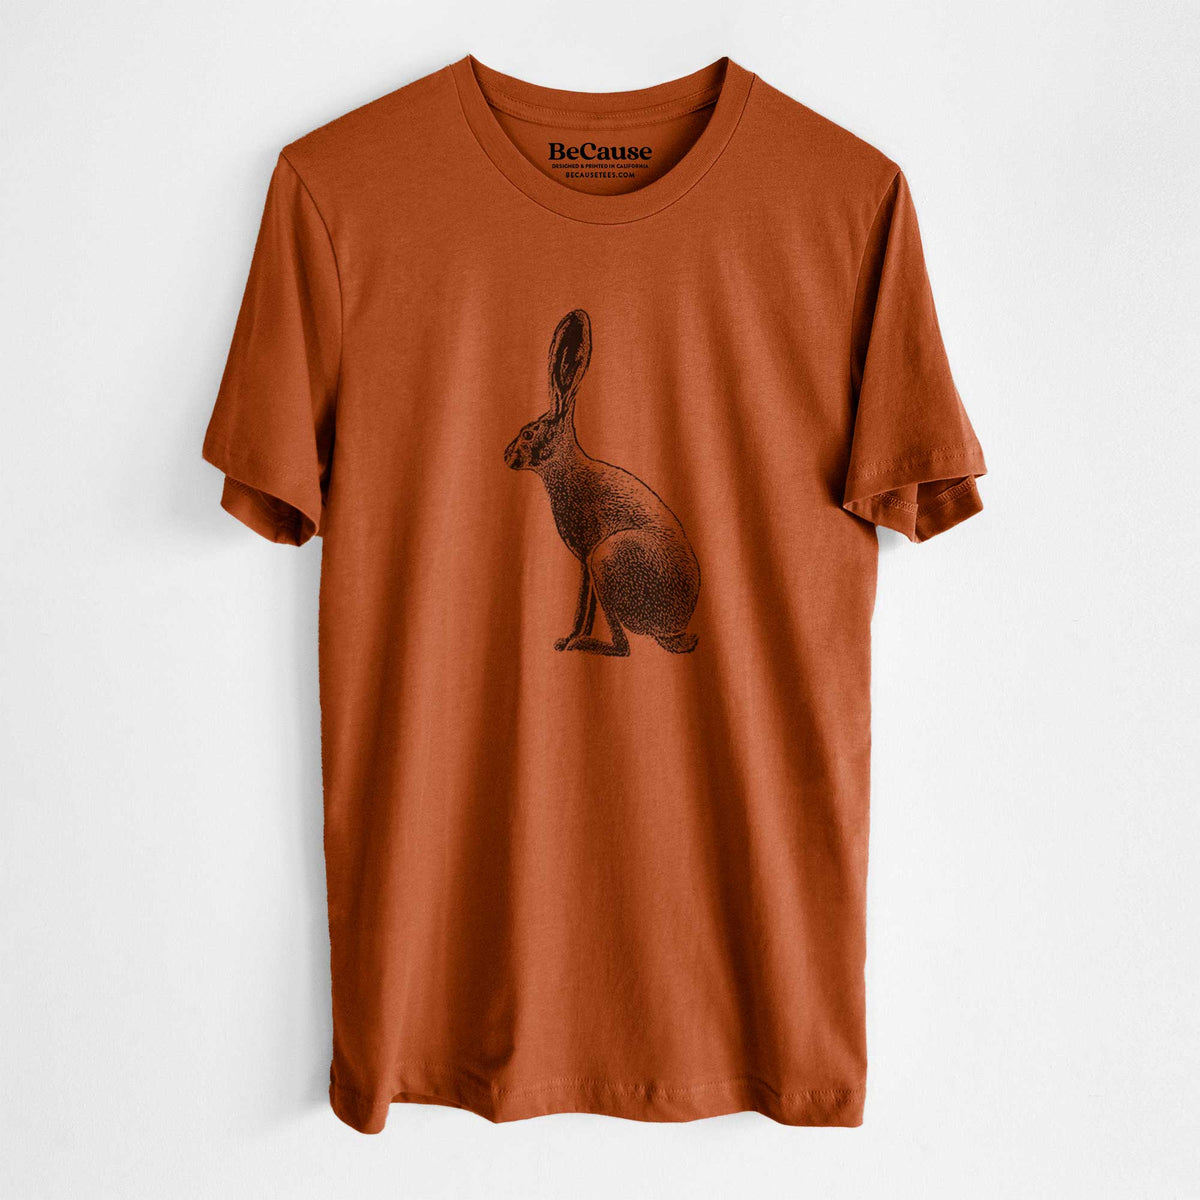 Wild California Hare - Black-tailed Jackrabbit - Lightweight 100% Cotton Unisex Crewneck